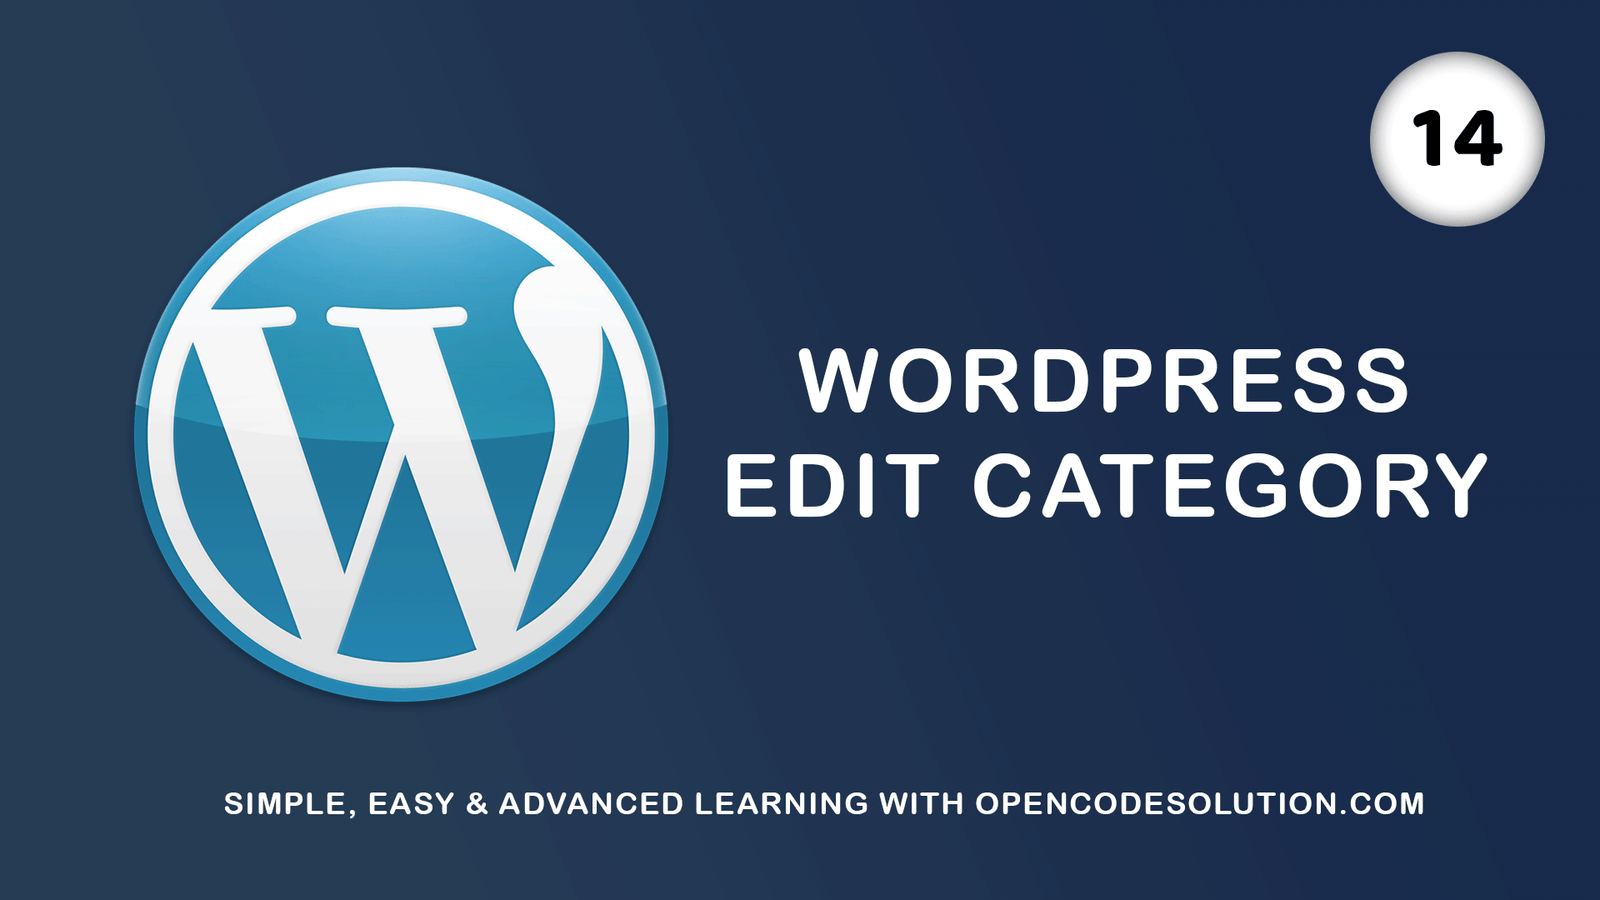 WordPress Edit Category #14